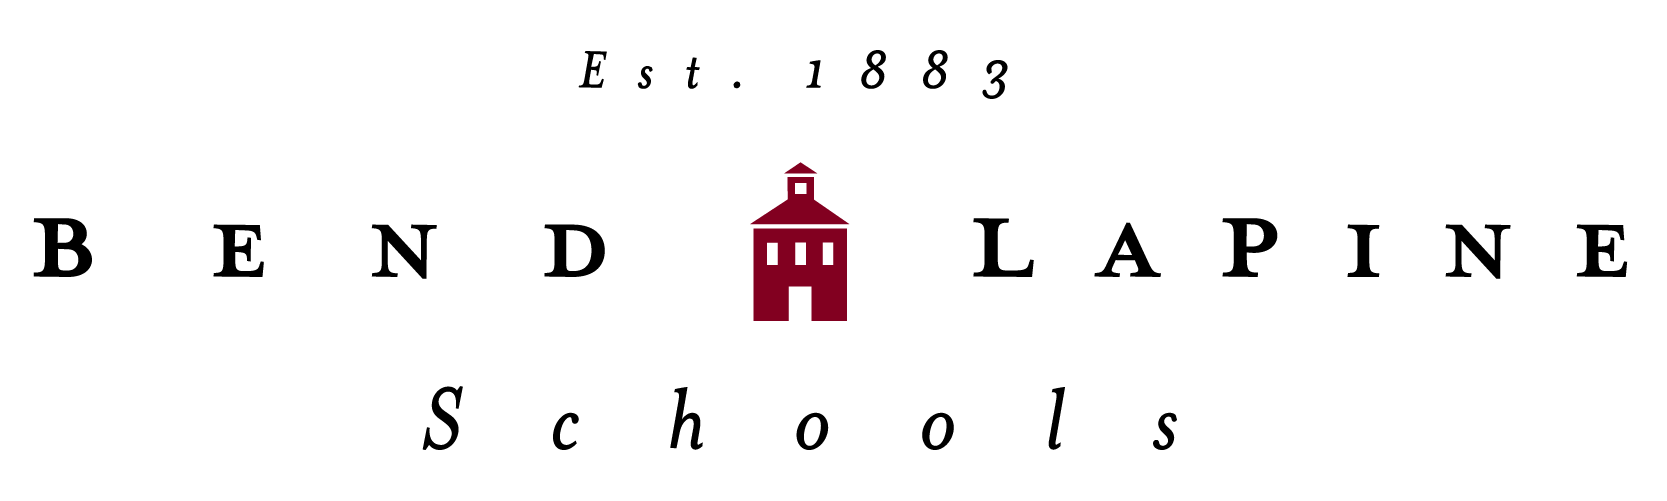 Bend-La Pine Schools Logo